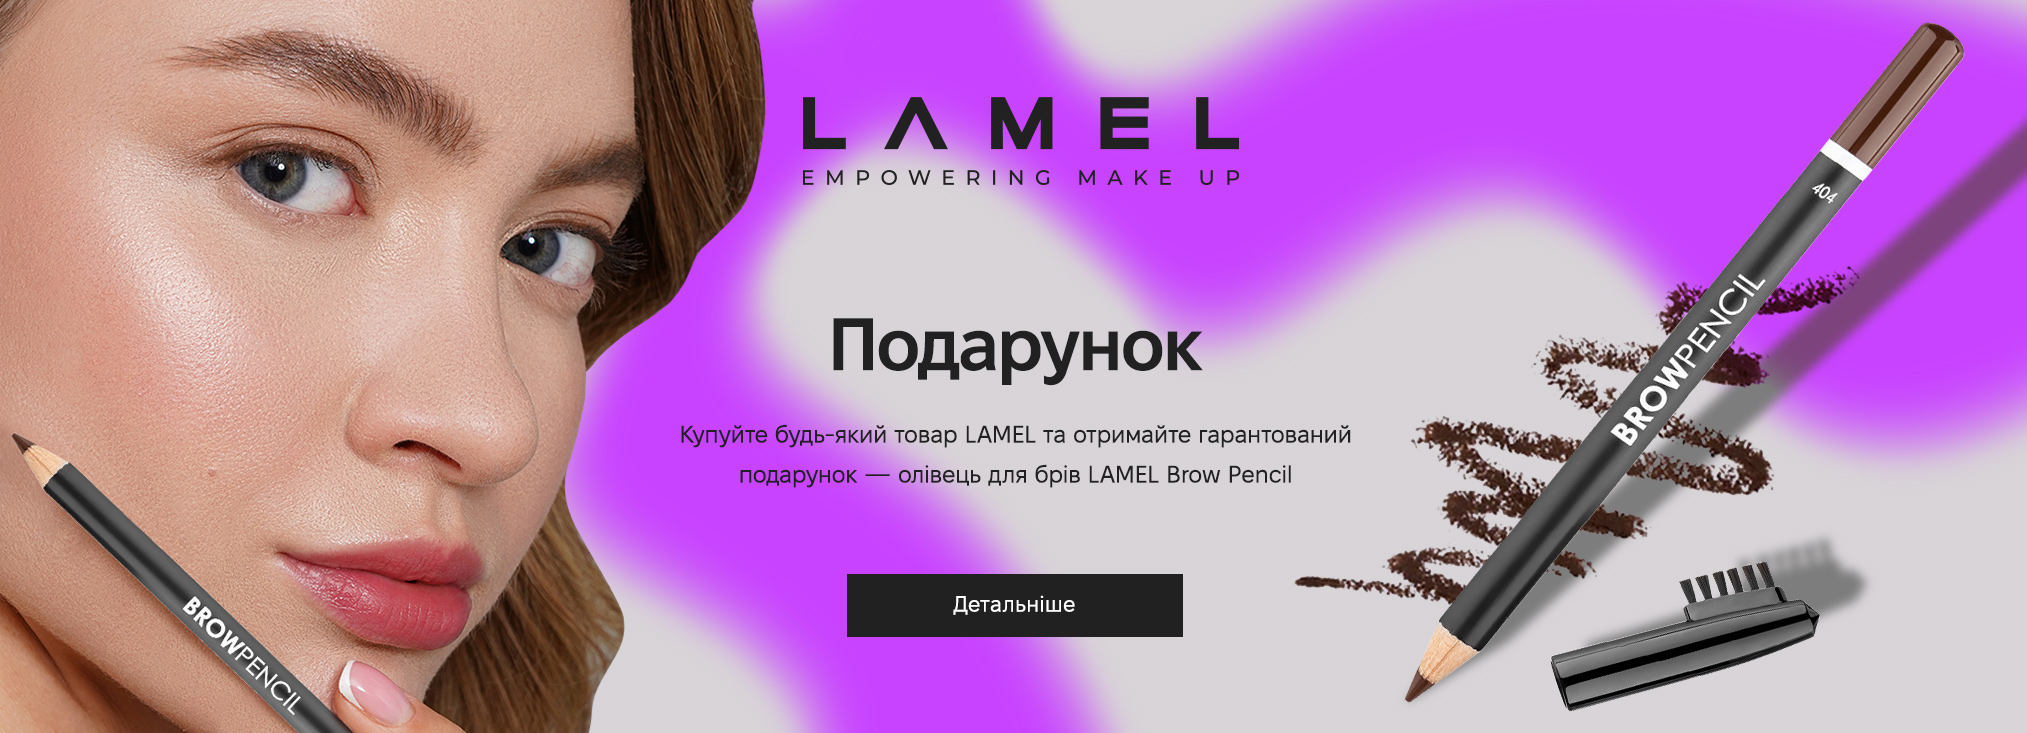 LAMEL Make Up_actions